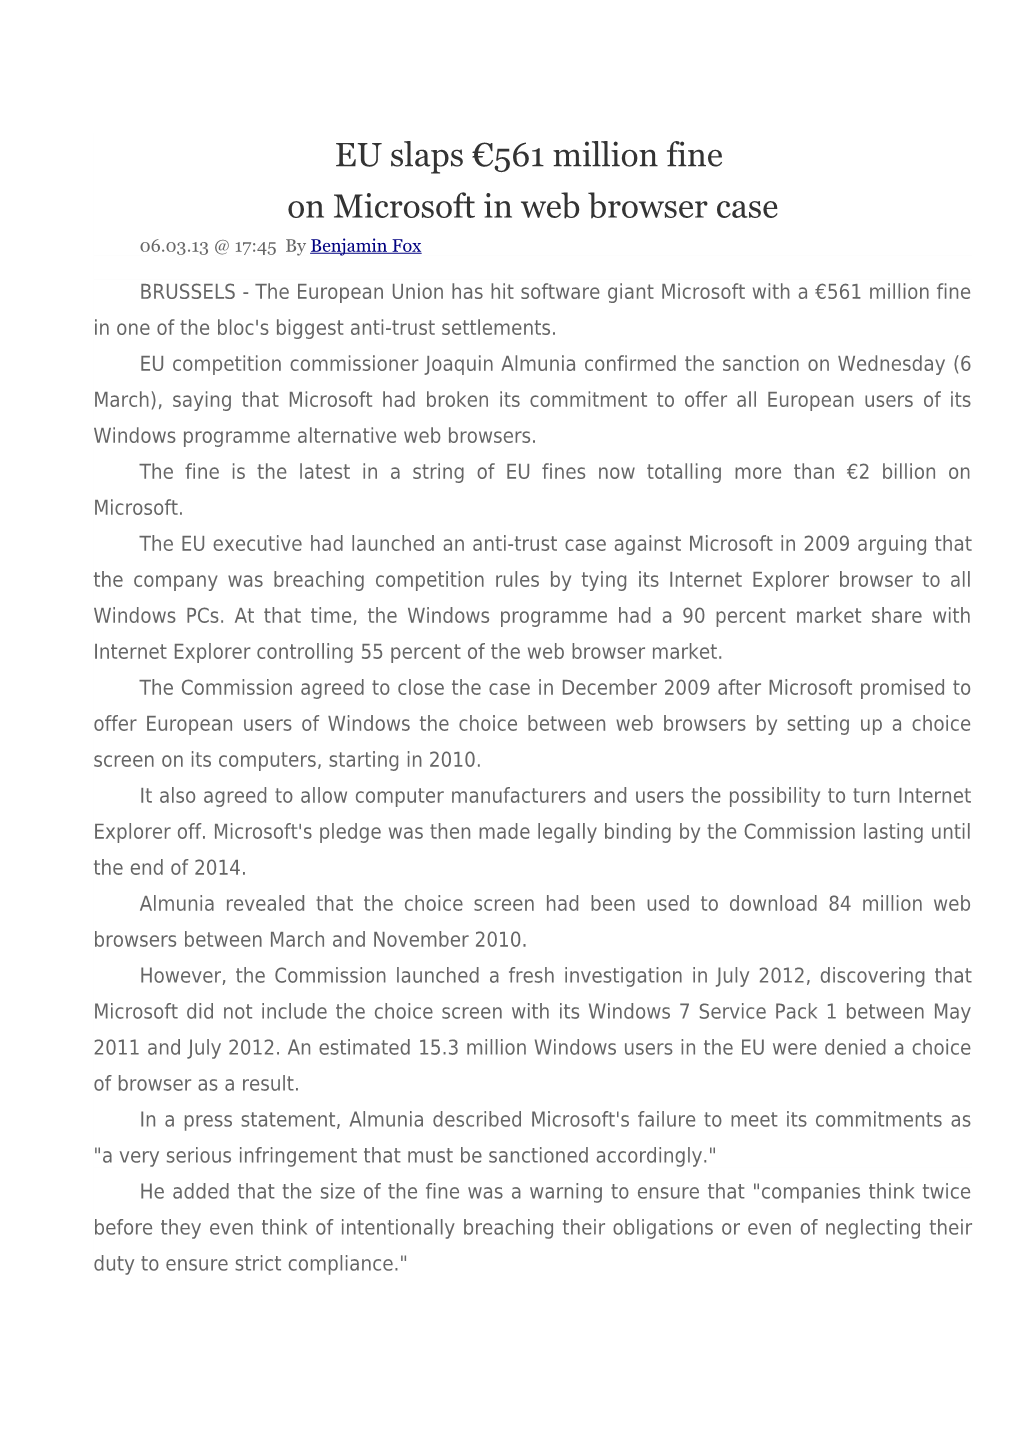 EU Slaps 561 Million Fine on Microsoft in Web Browser Case